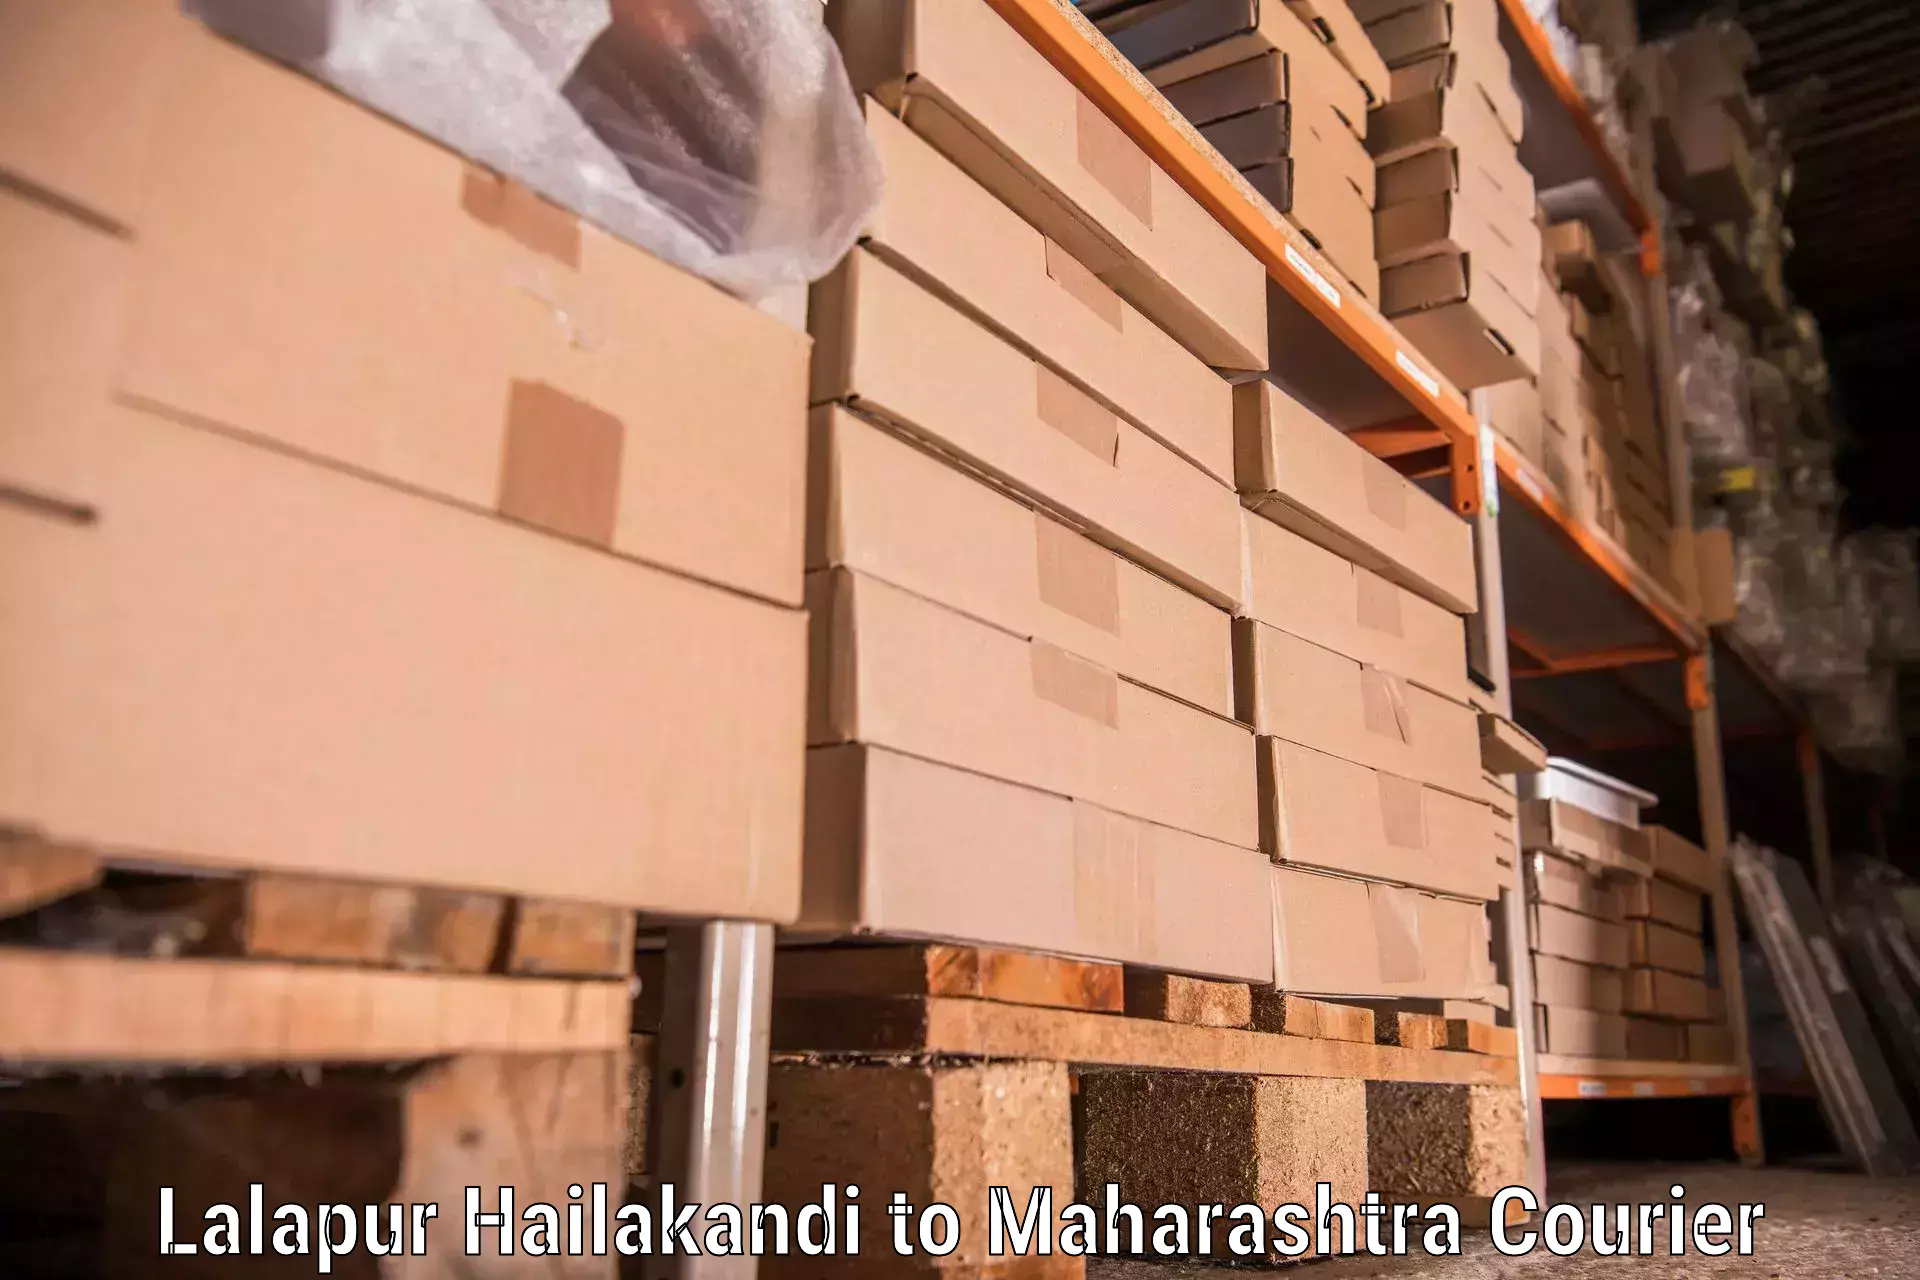 Furniture transport specialists Lalapur Hailakandi to Nandurbar